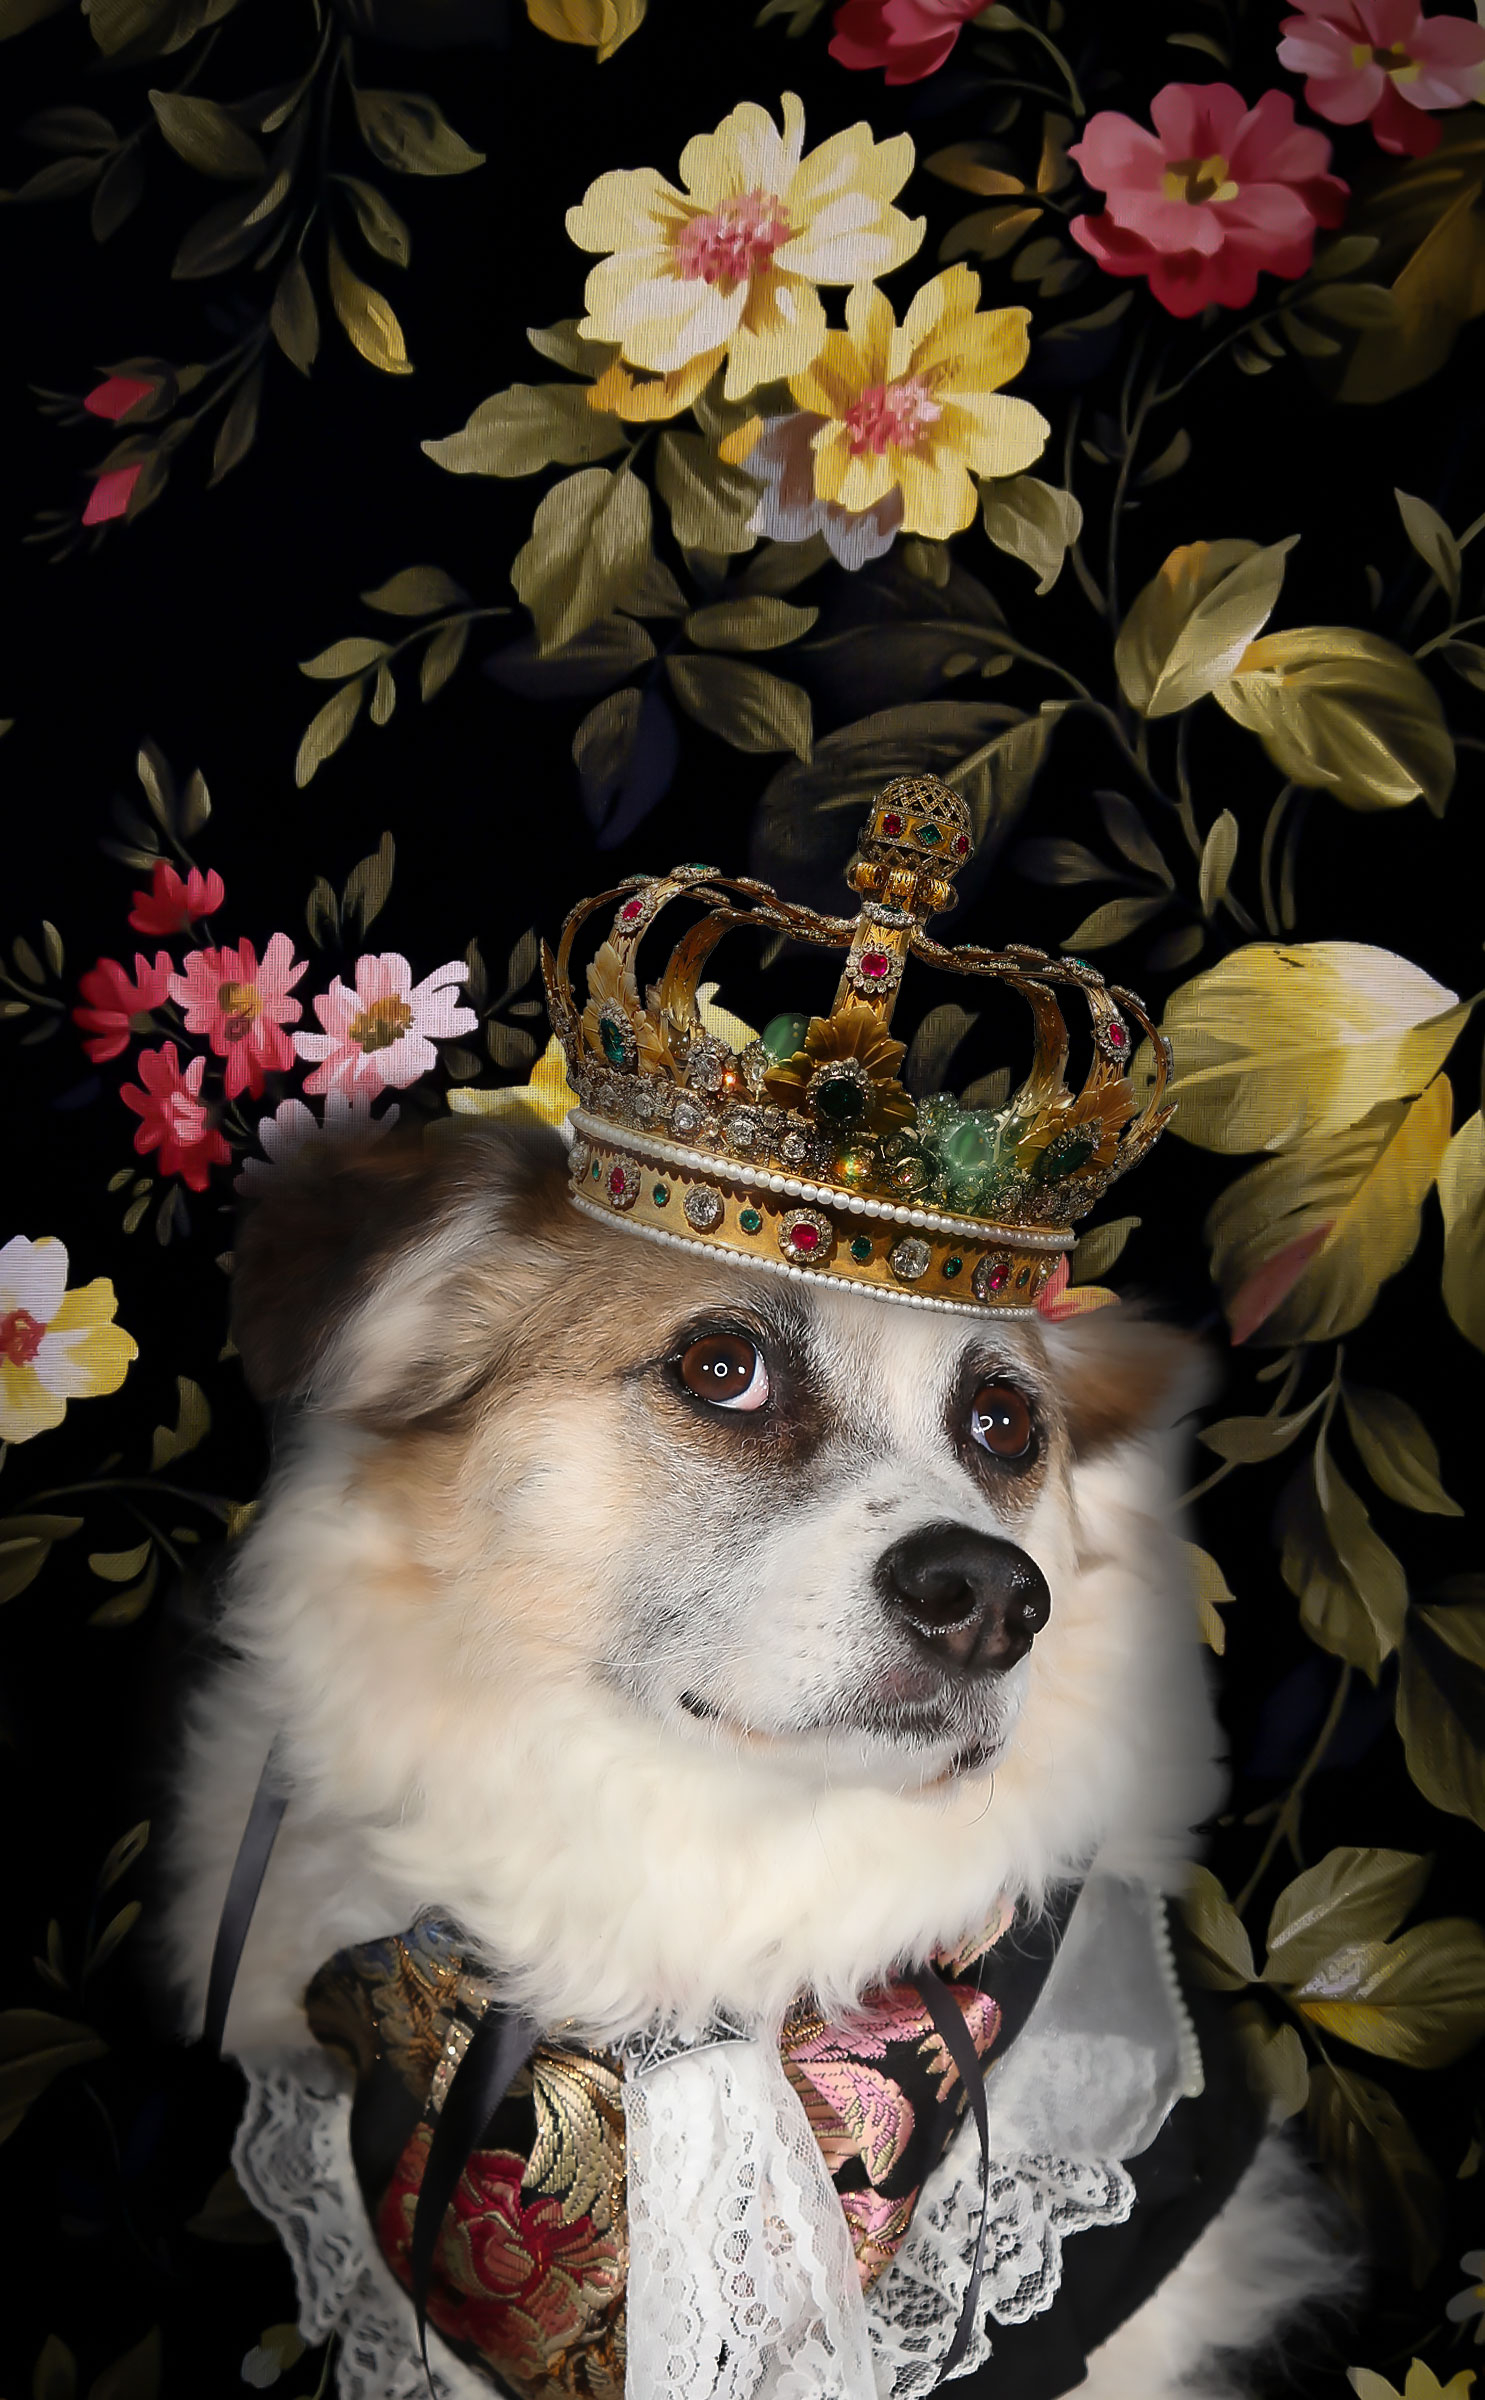 darwins dog corgi with crown